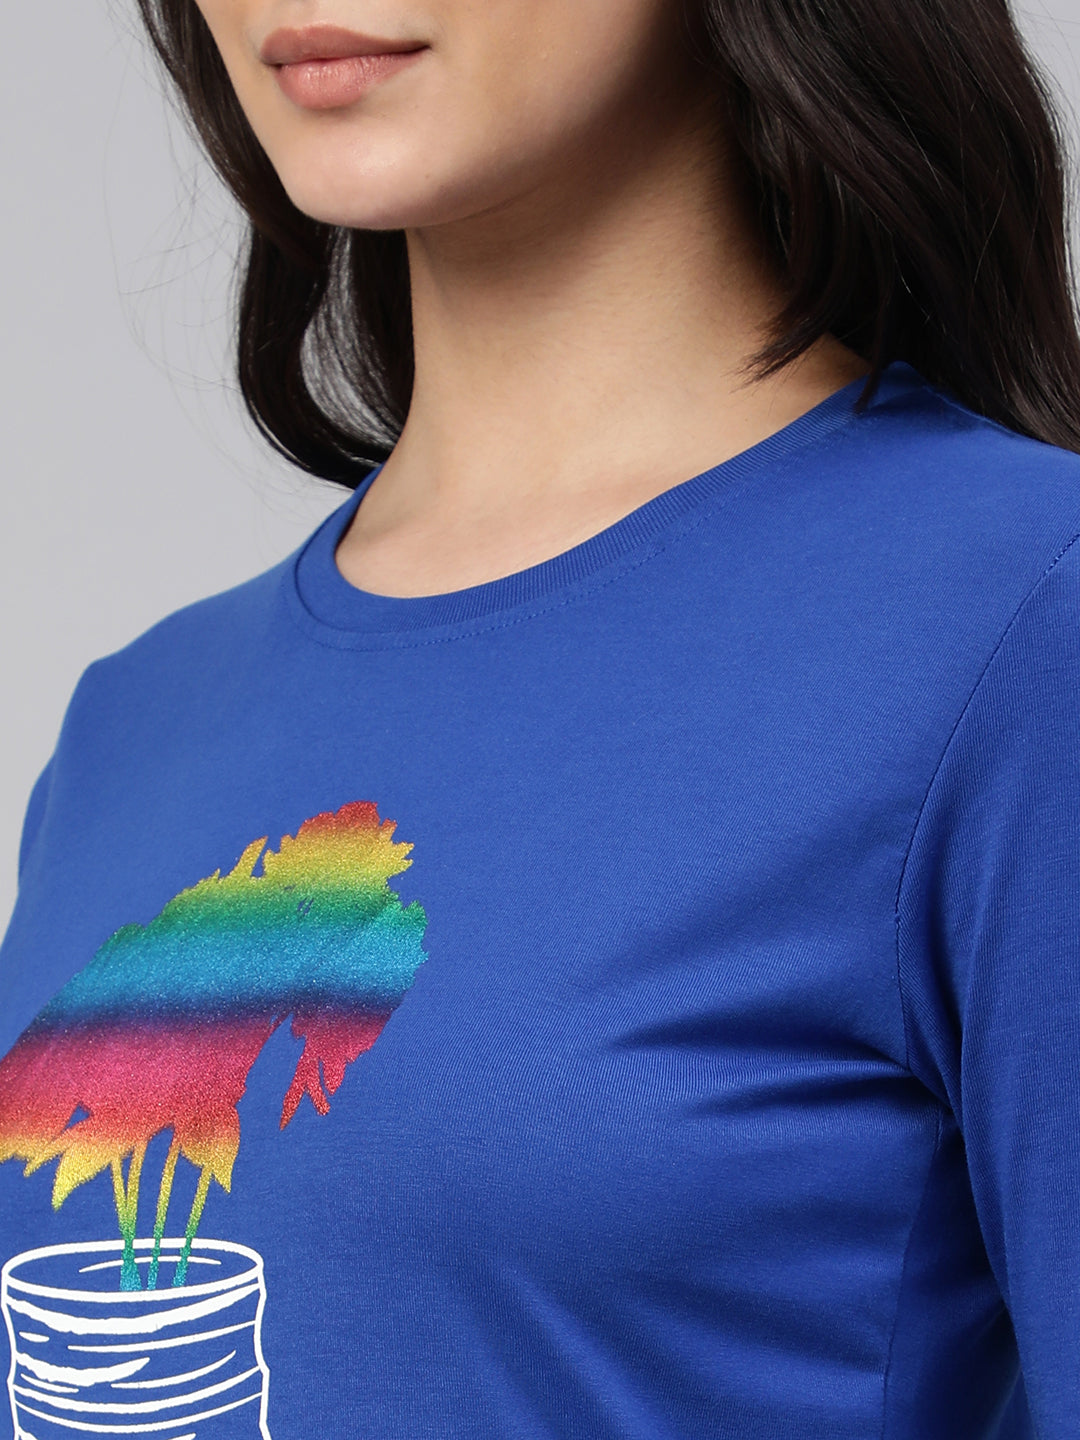 Blue printed cotton tshirt for women